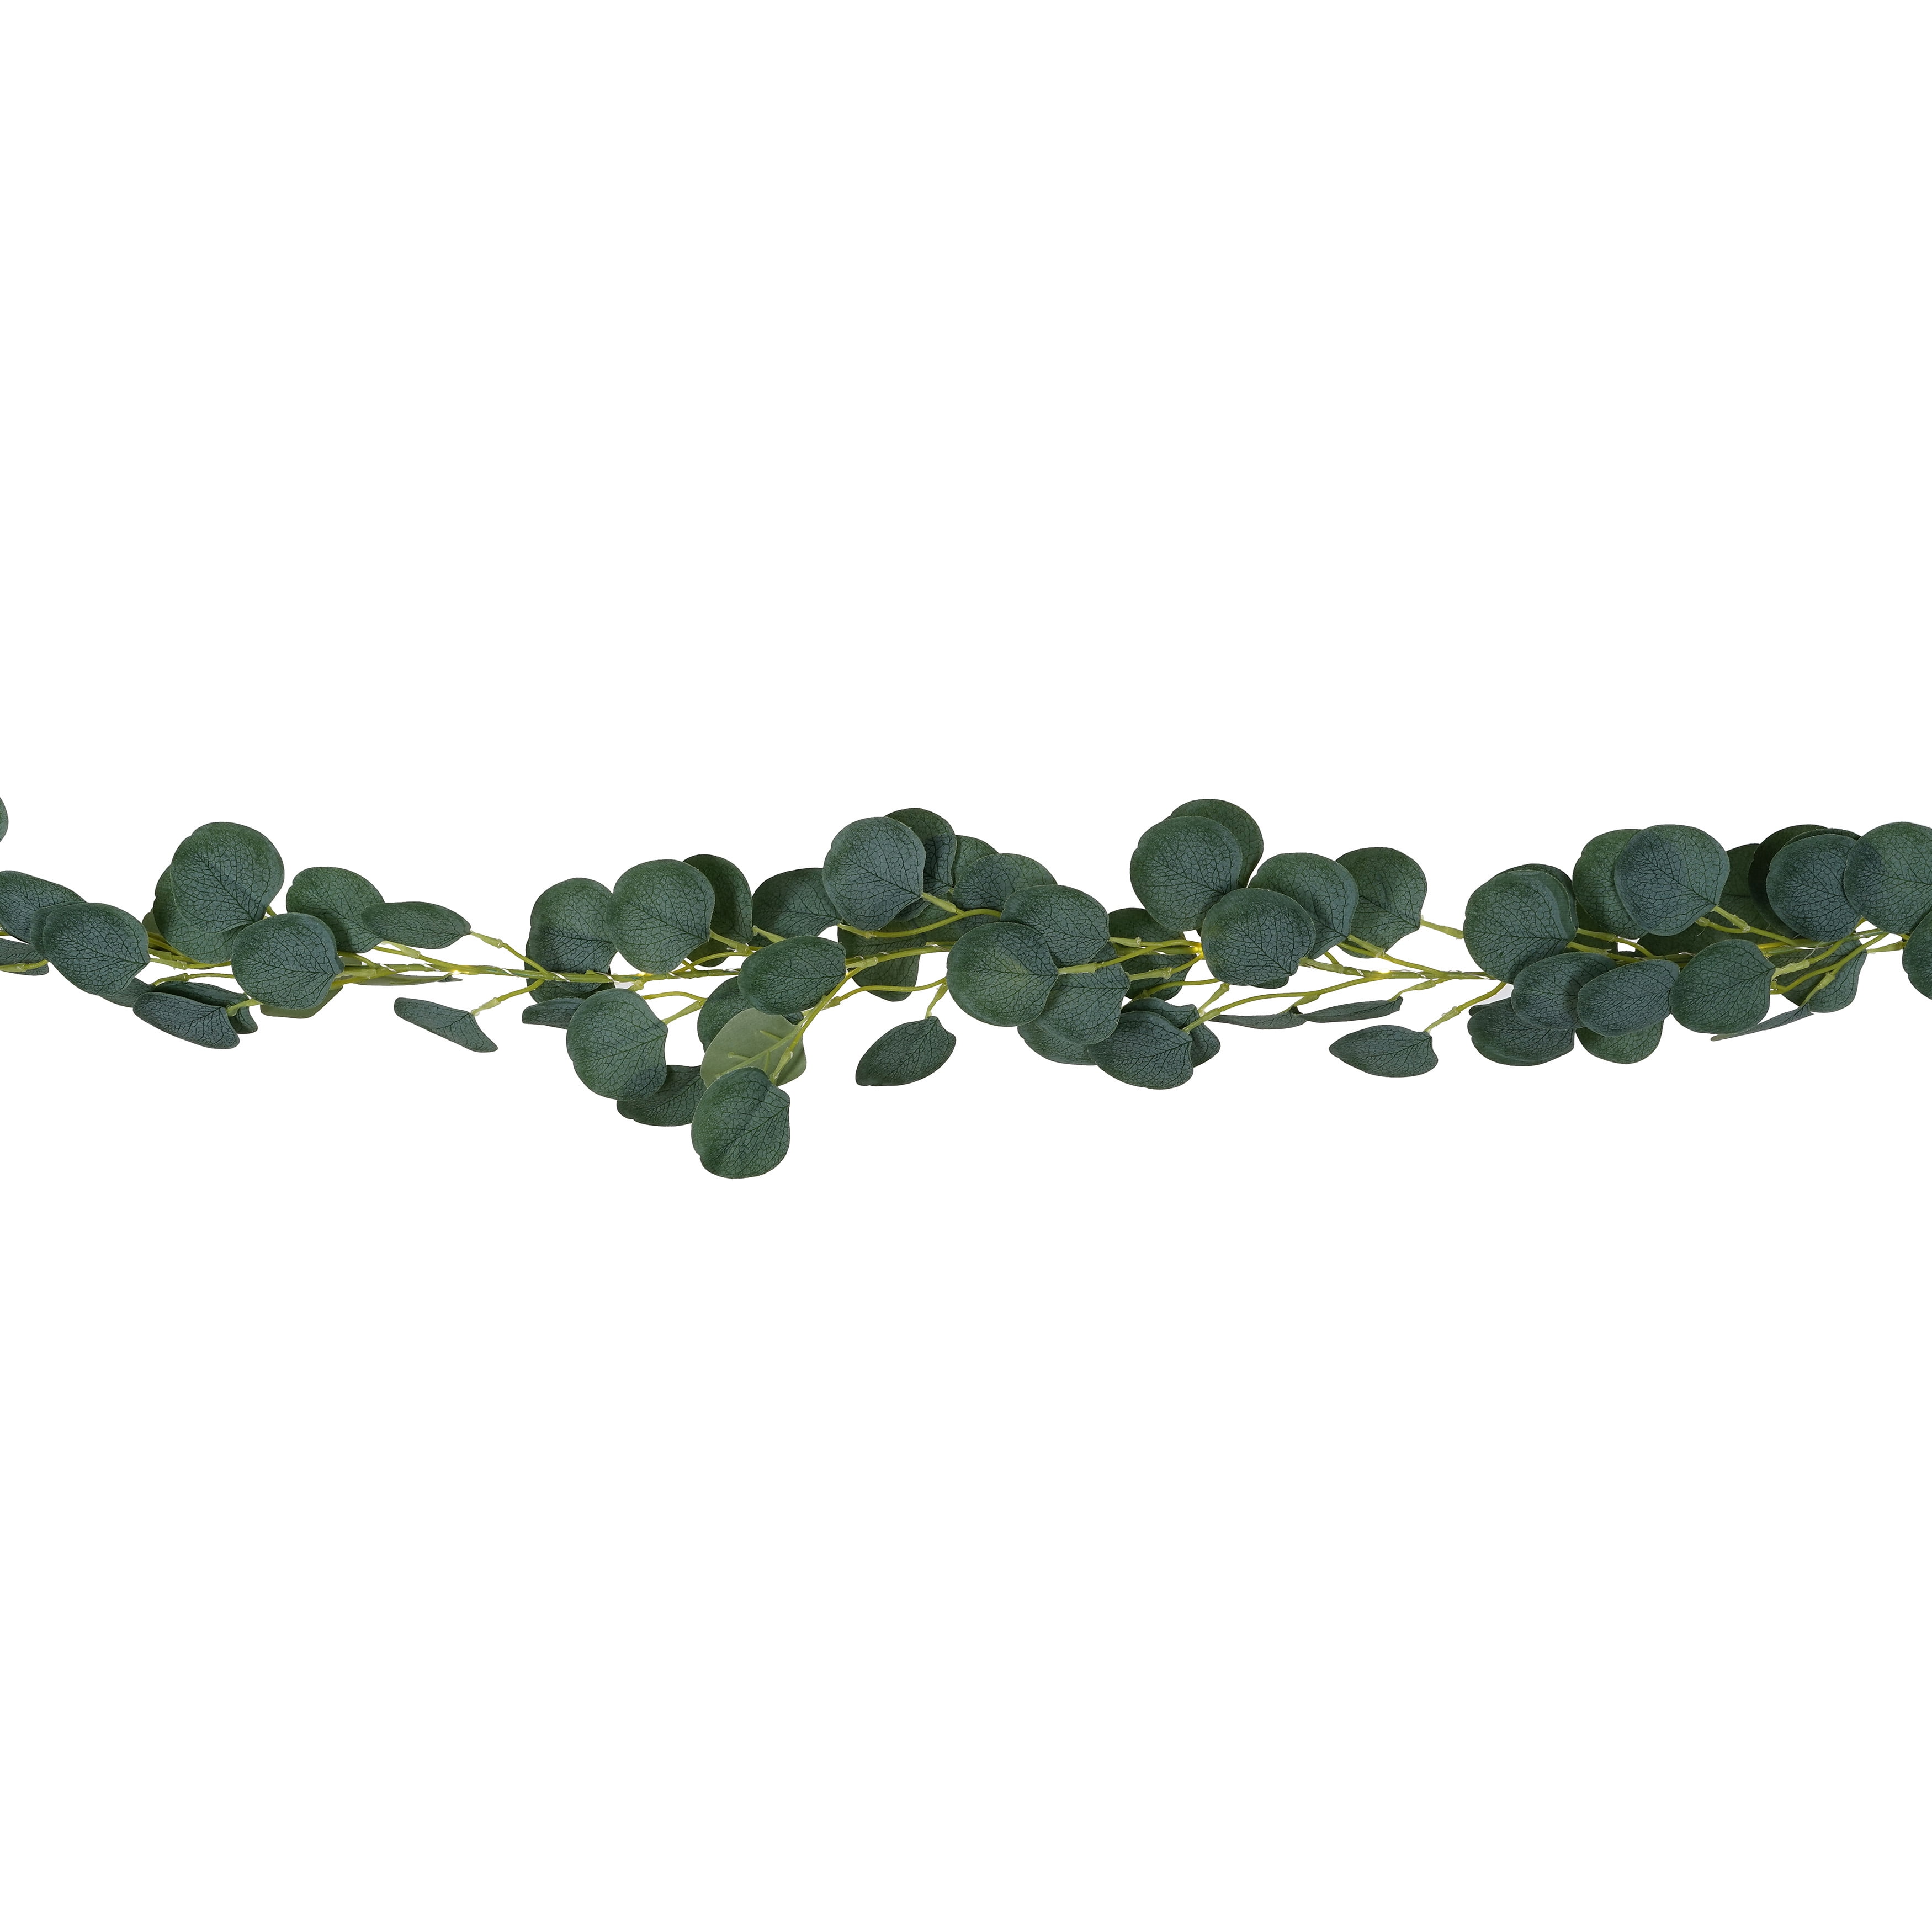 Mainstays 7-Foot Leafy Garland LED String Lights, Eucalyptus Leaf Shape, Green Finish